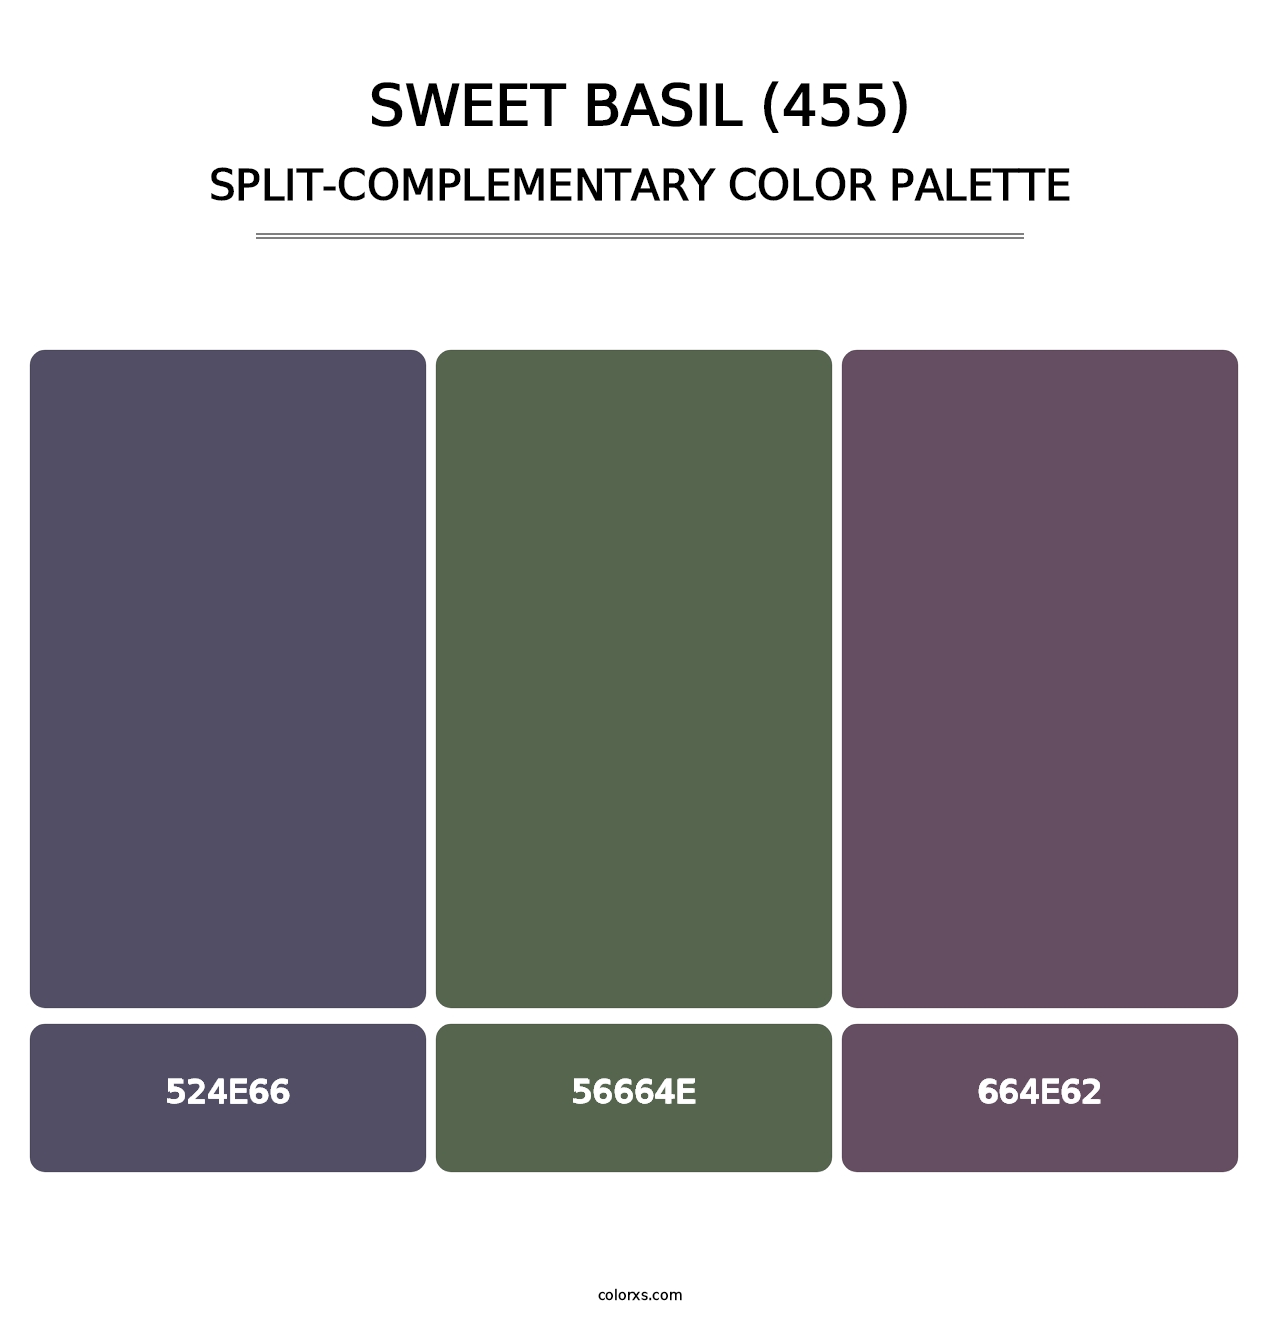 Sweet Basil (455) - Split-Complementary Color Palette